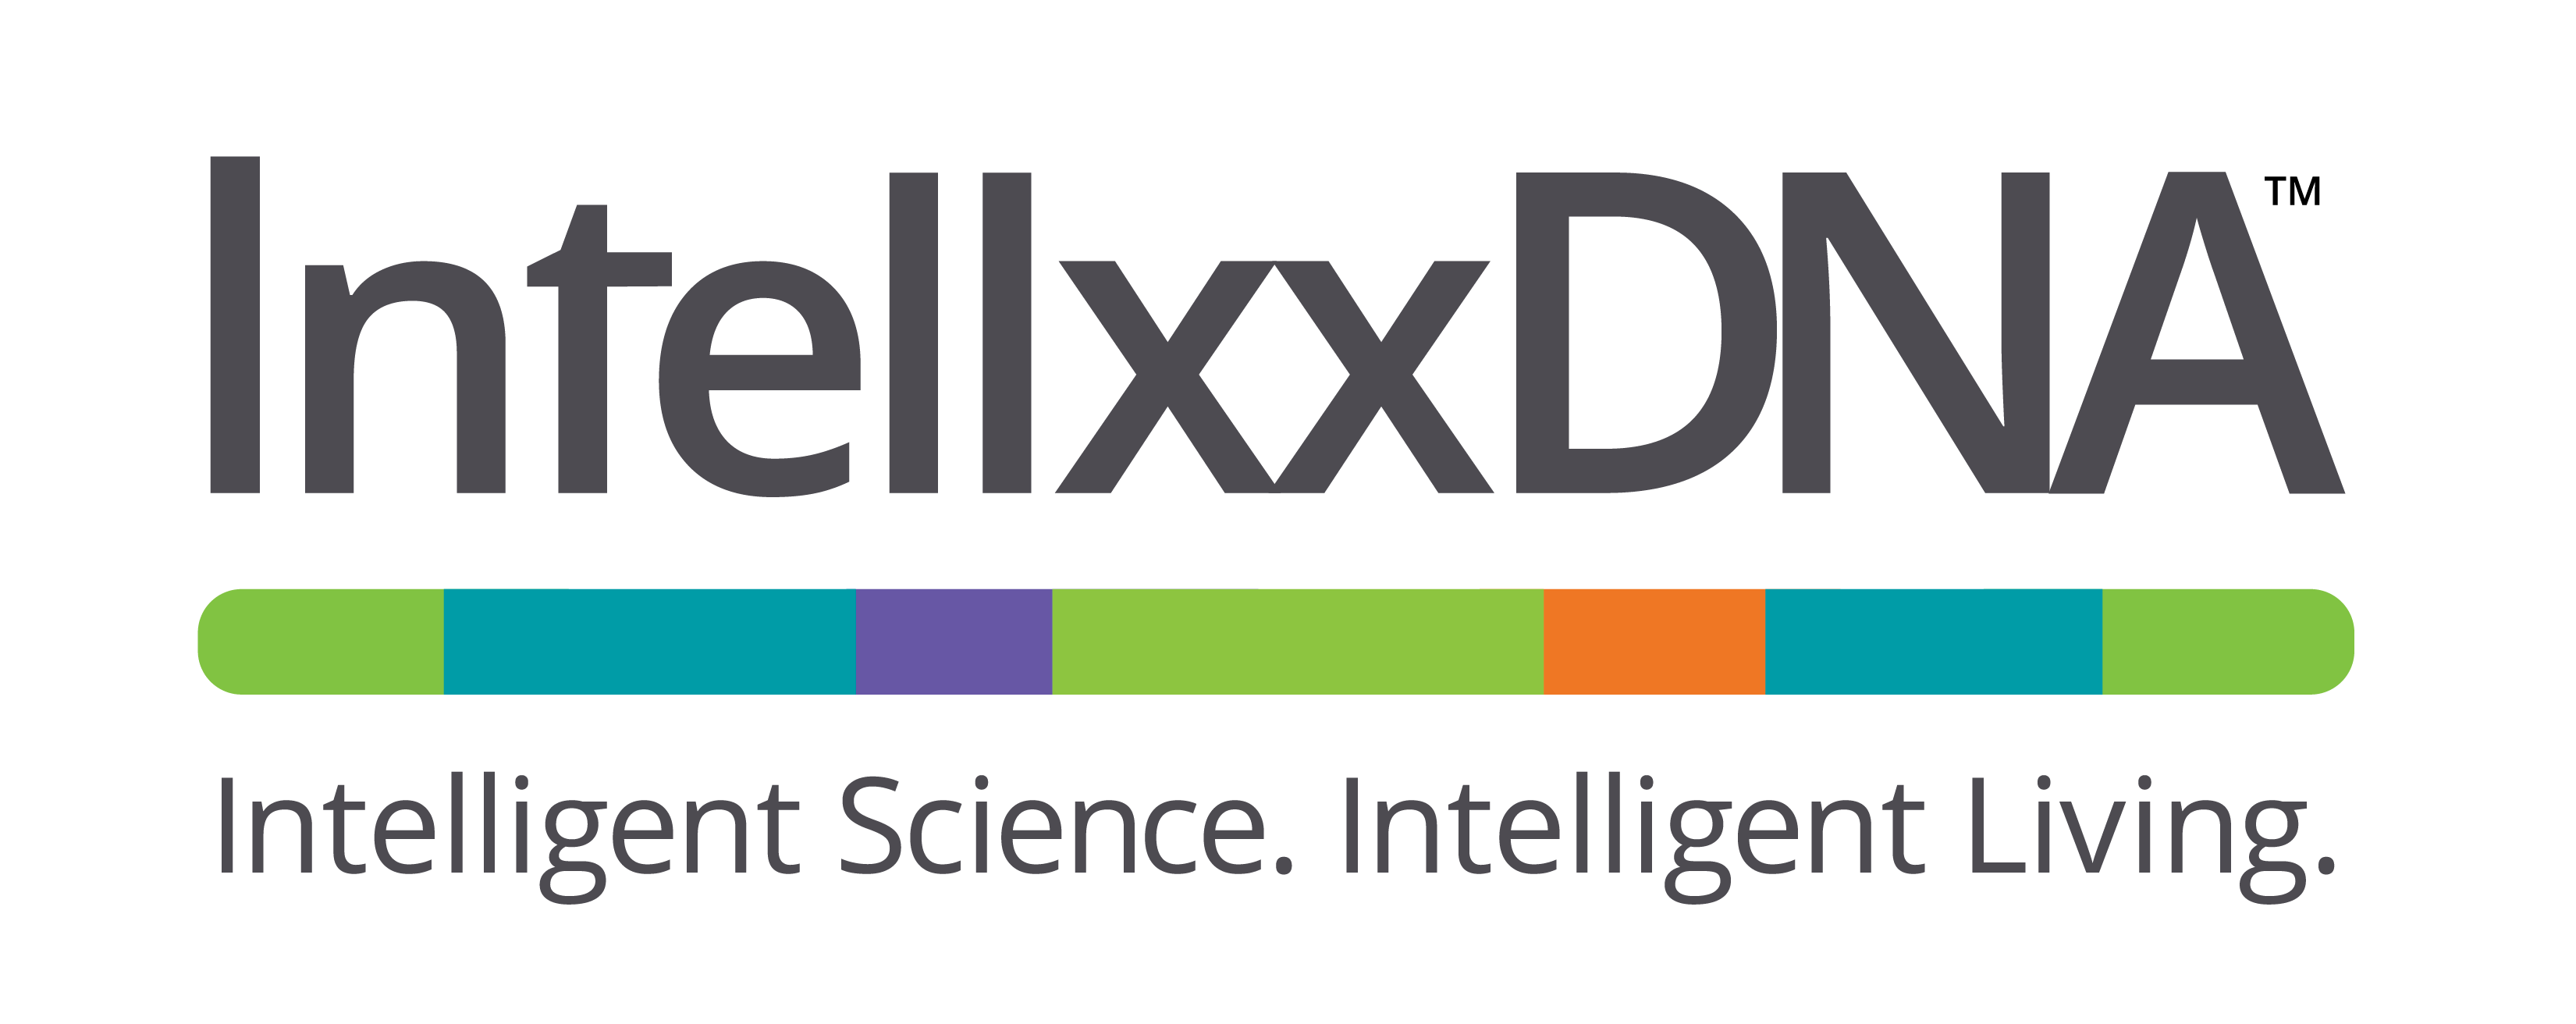 Intellxx DNA Genomic Testing IXXD